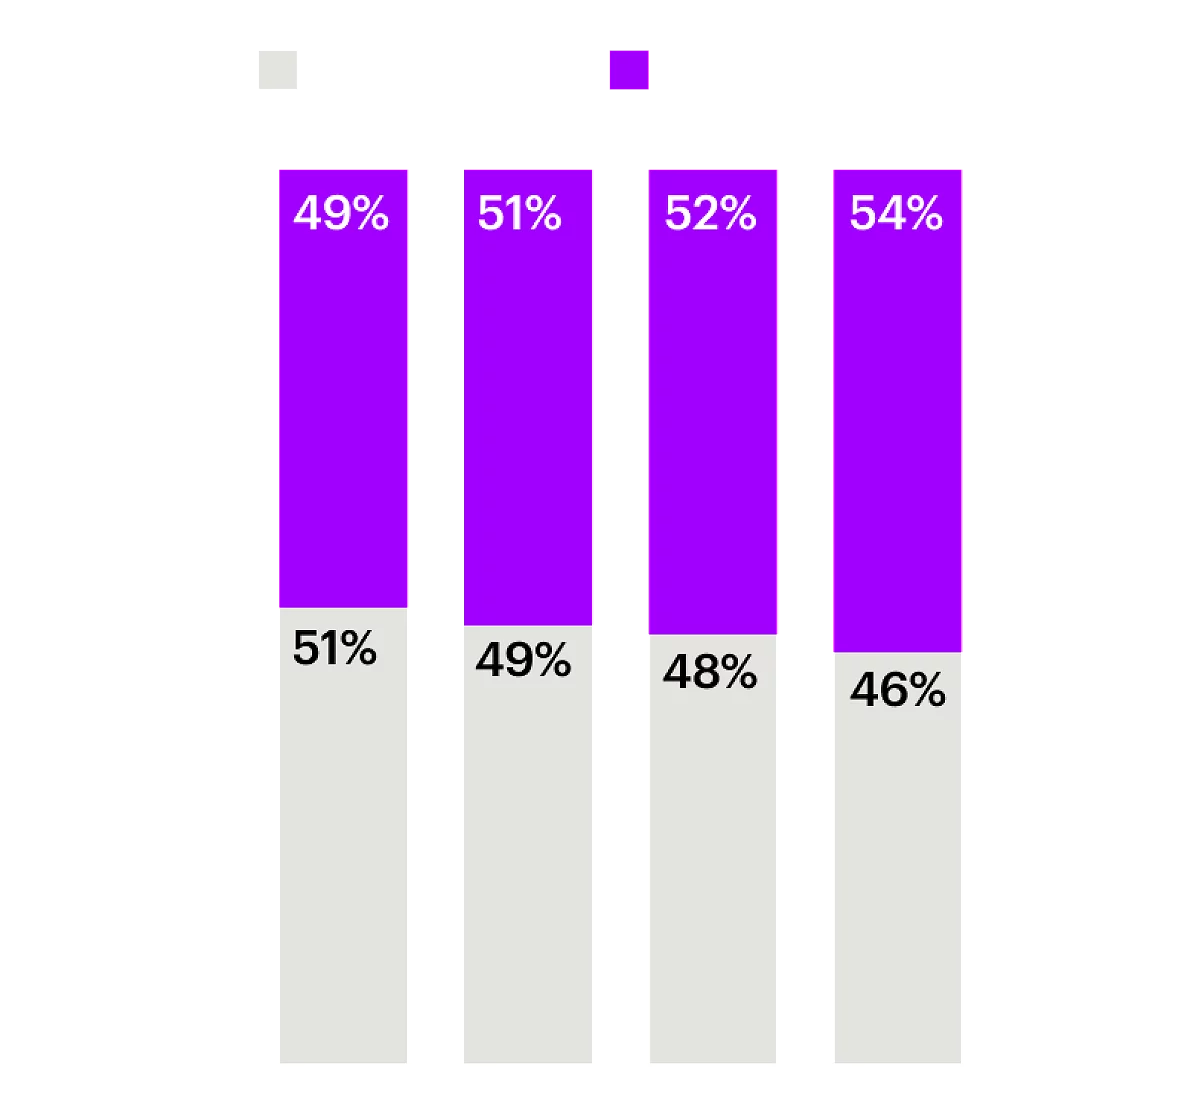 Bar graph showing the average percentage of network budget spent on maintenance vs. modernization.